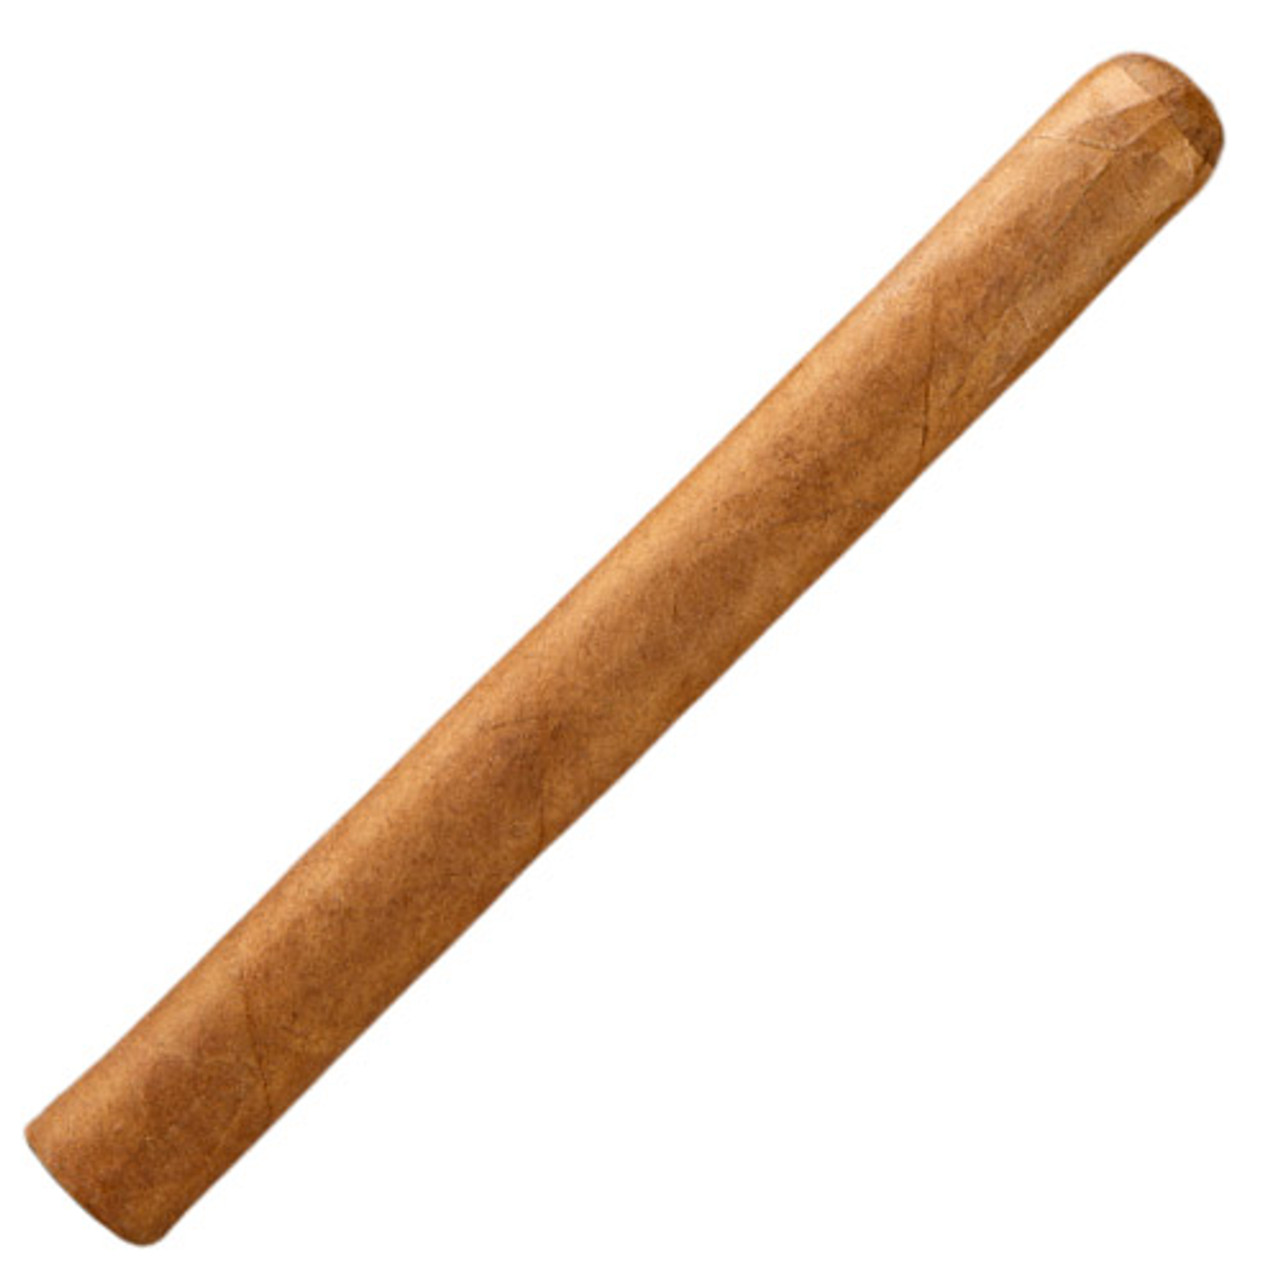 Honduran Overruns Ecuador Habano Lonsdale Cigars - 6 x 44 (Bundle of 20)